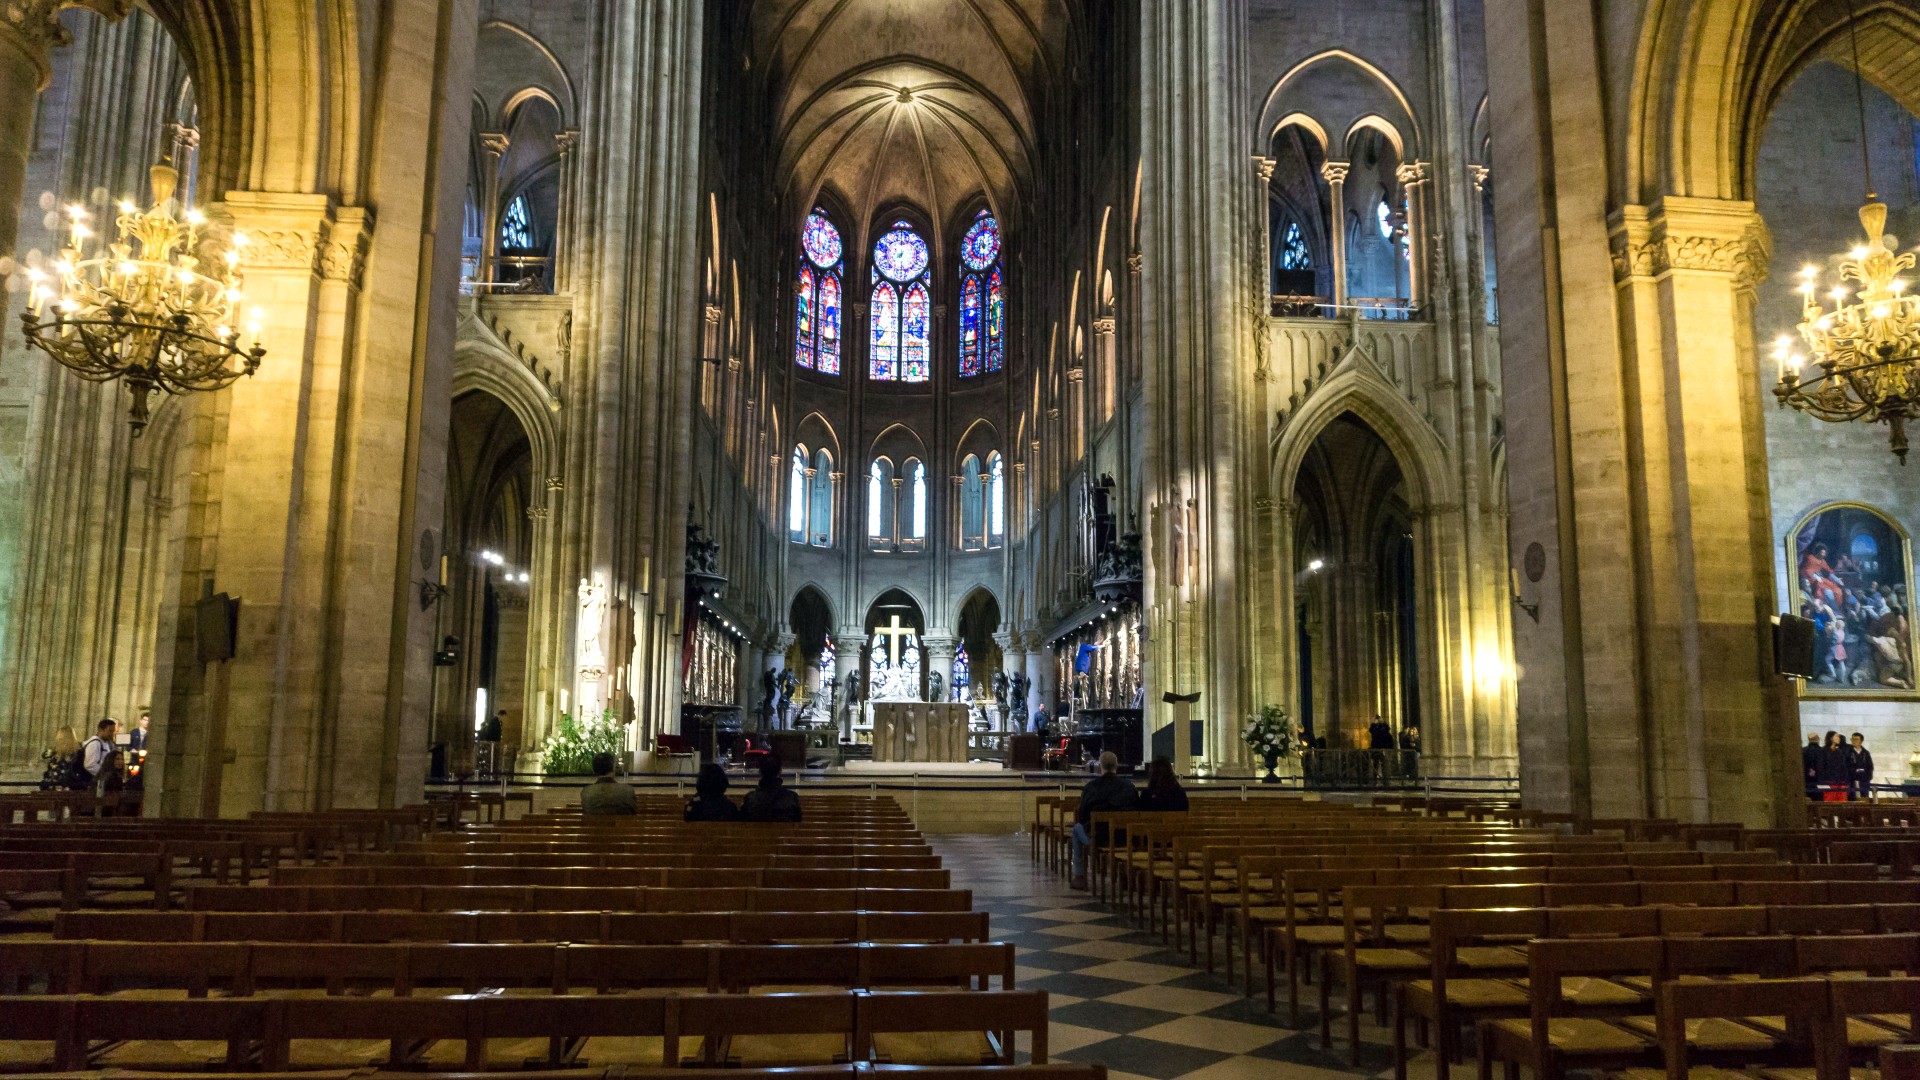 picture: Paryska katedra bogatych, ława, nawa, Francja (image)